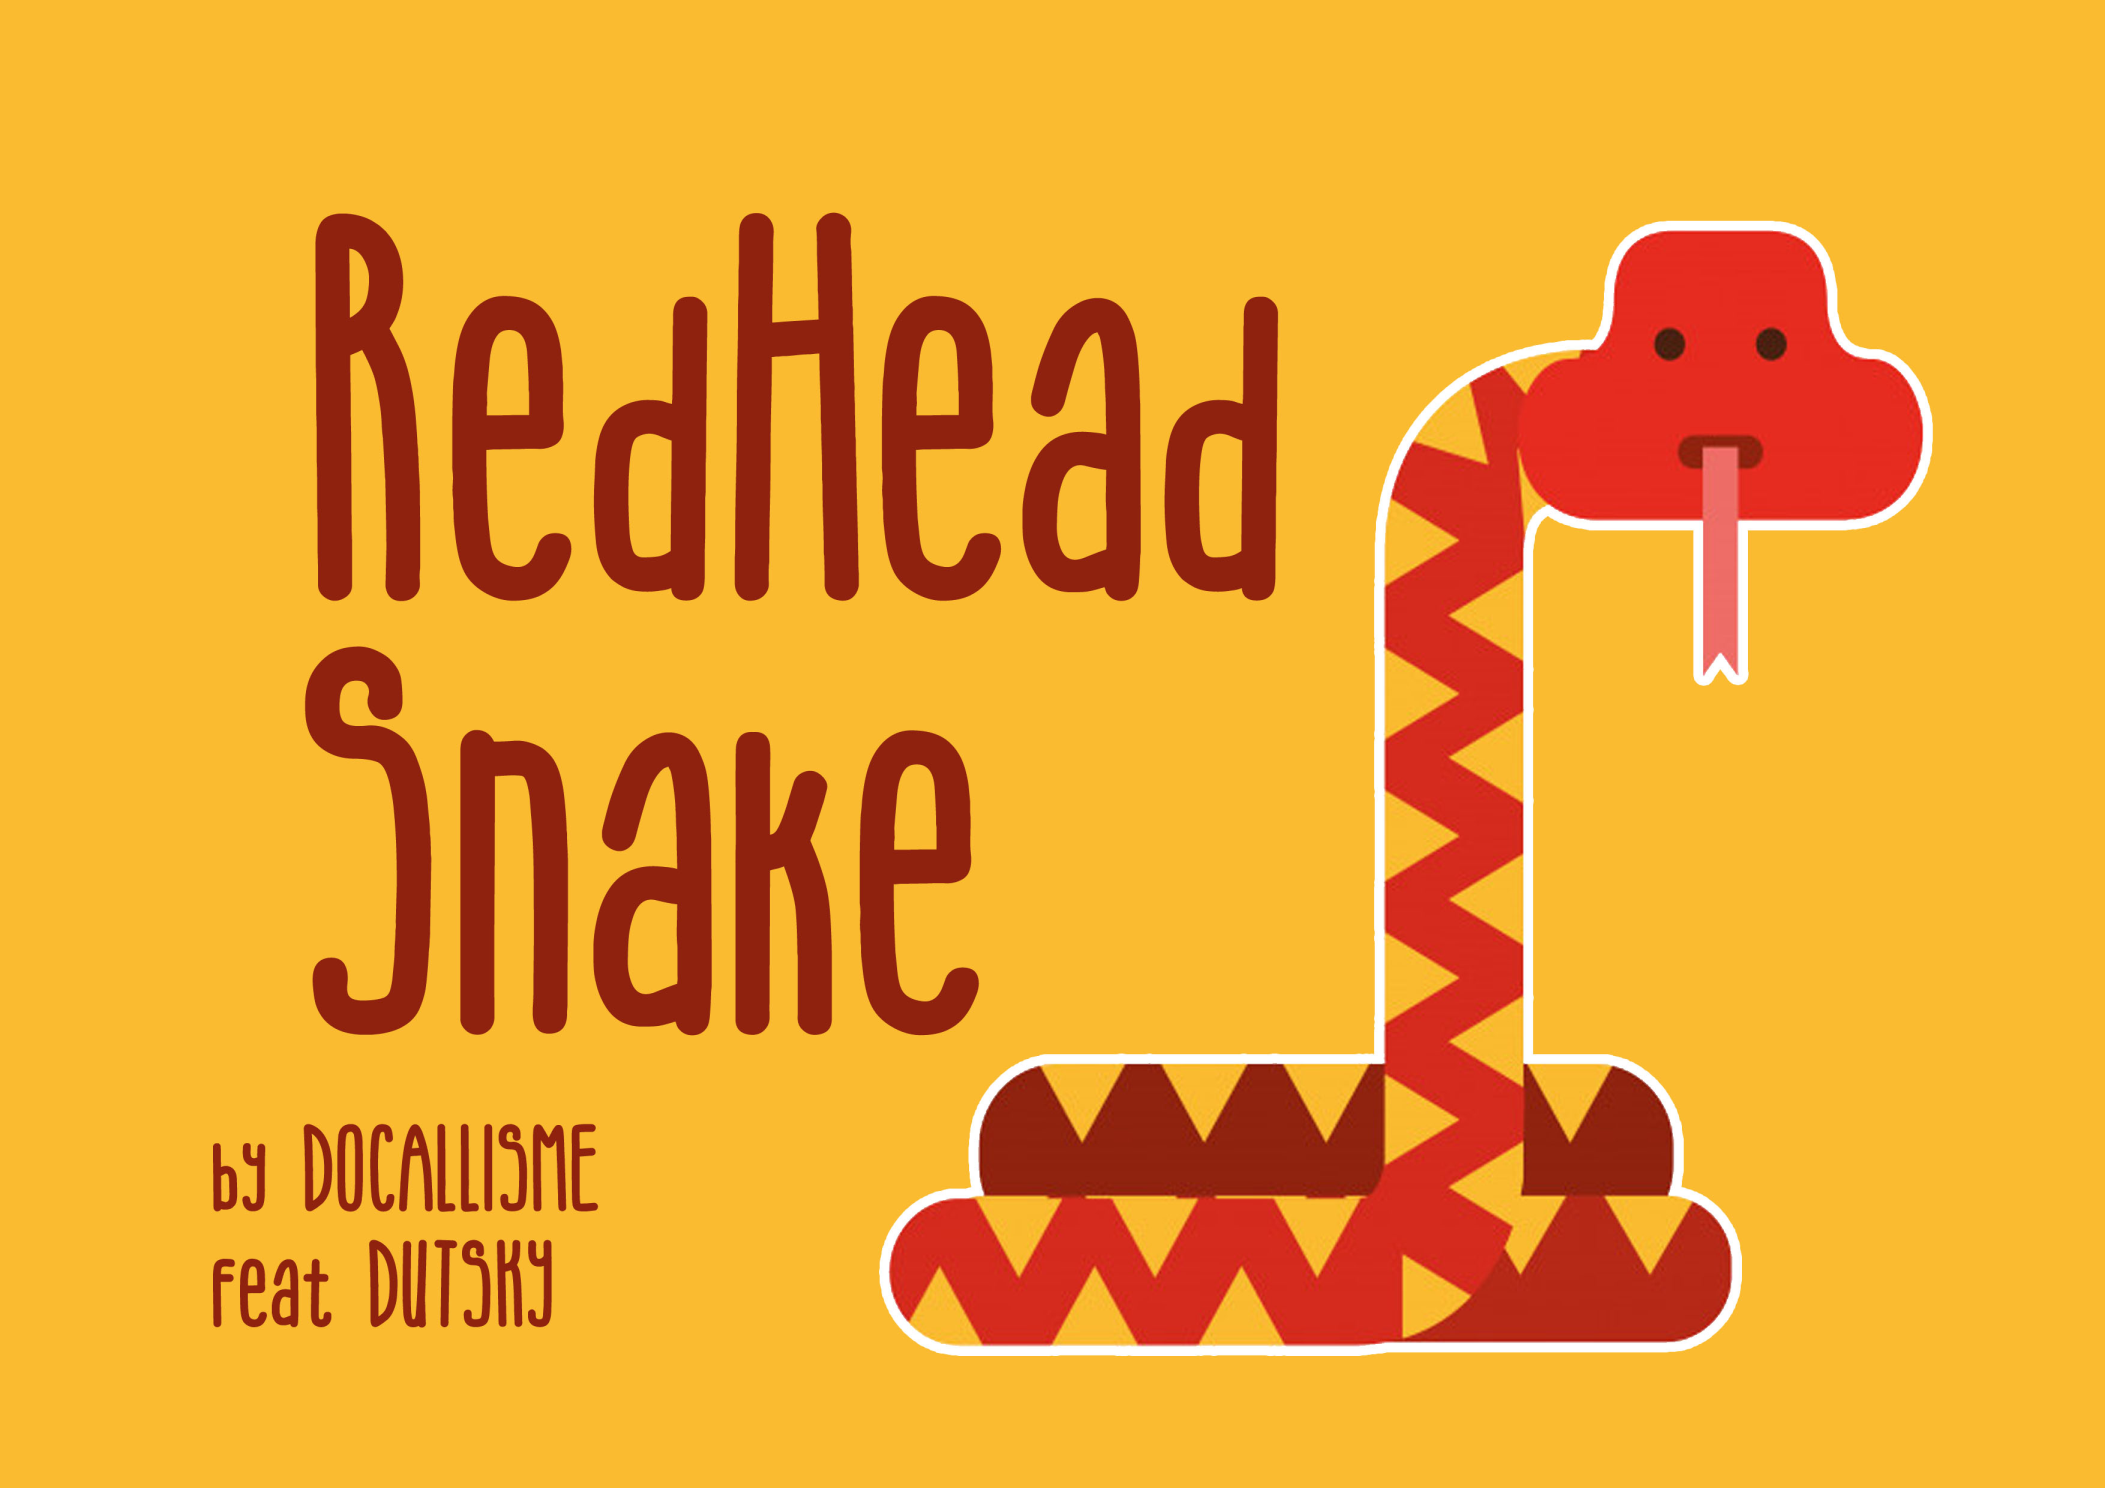 RedHead Snake